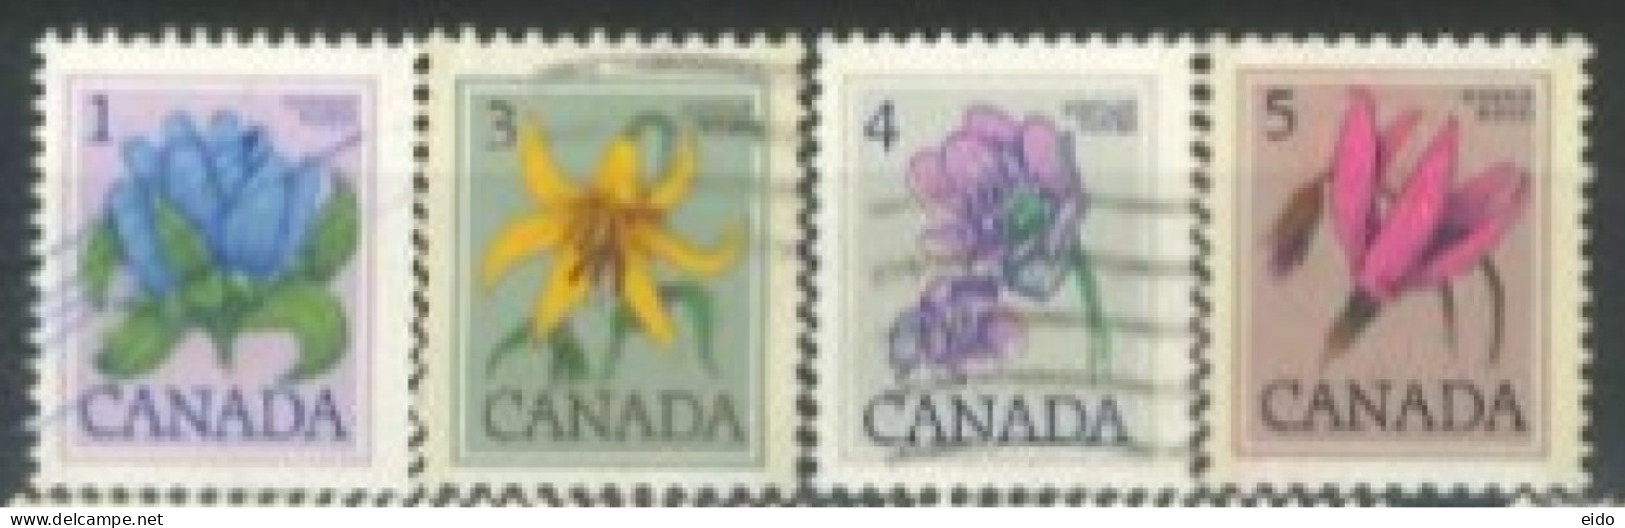 CANADA - 1977, FLOWERS STAMPS SET OF 4, USED. - Gebruikt